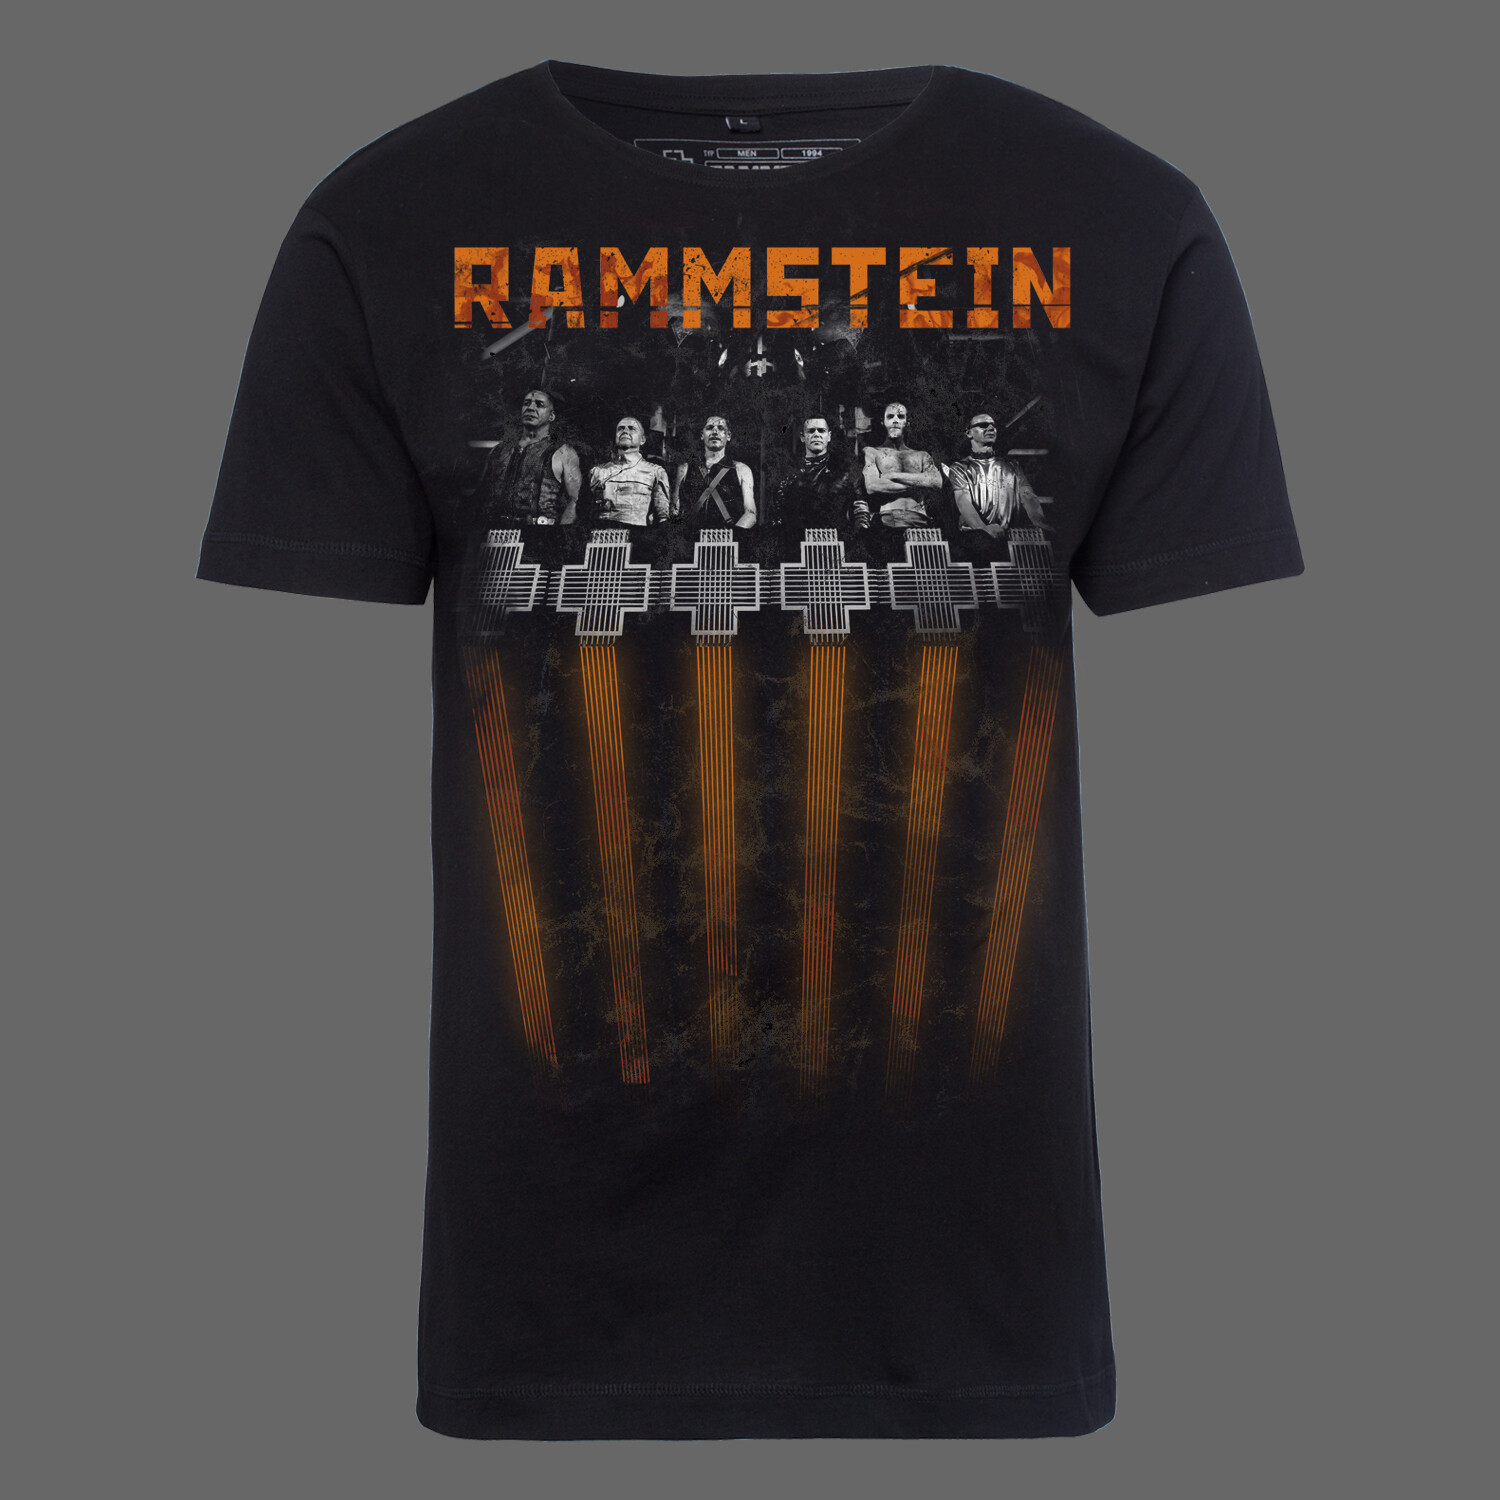 Rammstein Shop: Unleash Your Inner Rocker